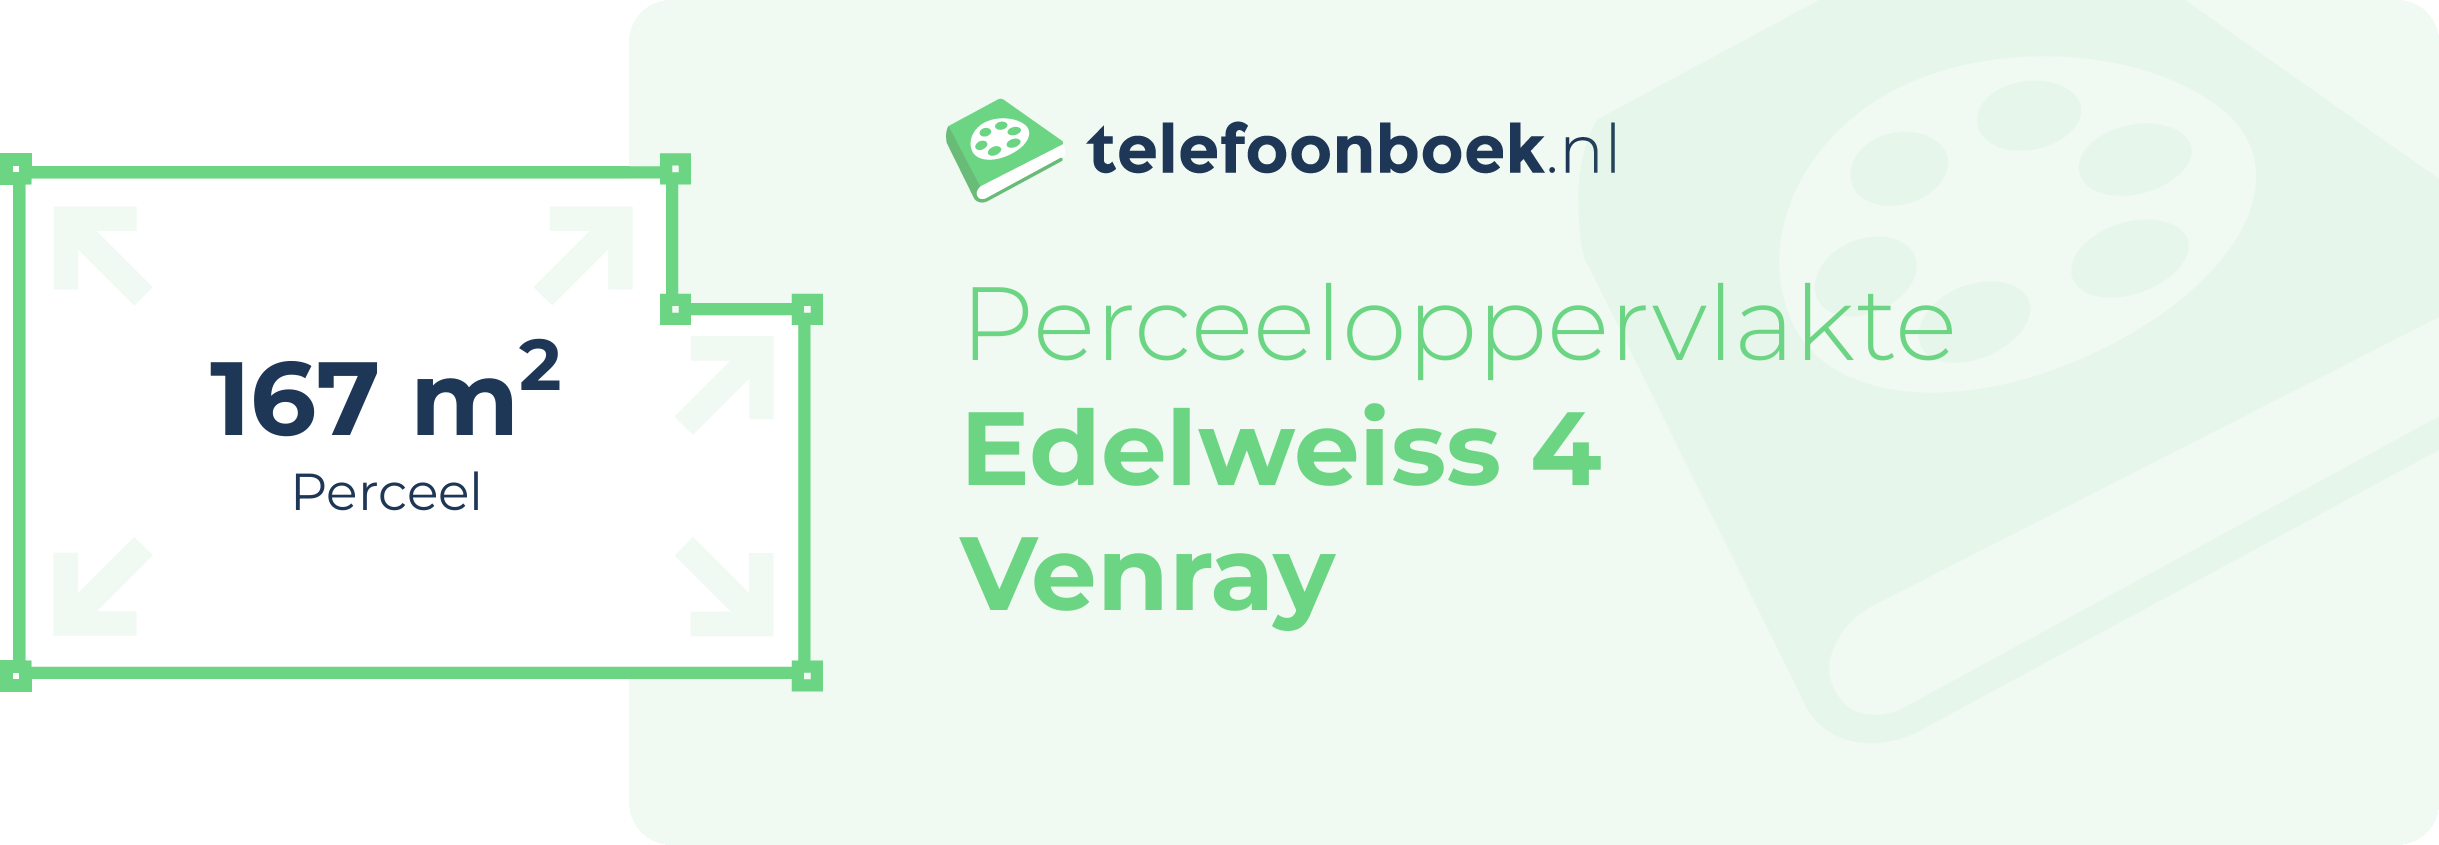 Perceeloppervlakte Edelweiss 4 Venray